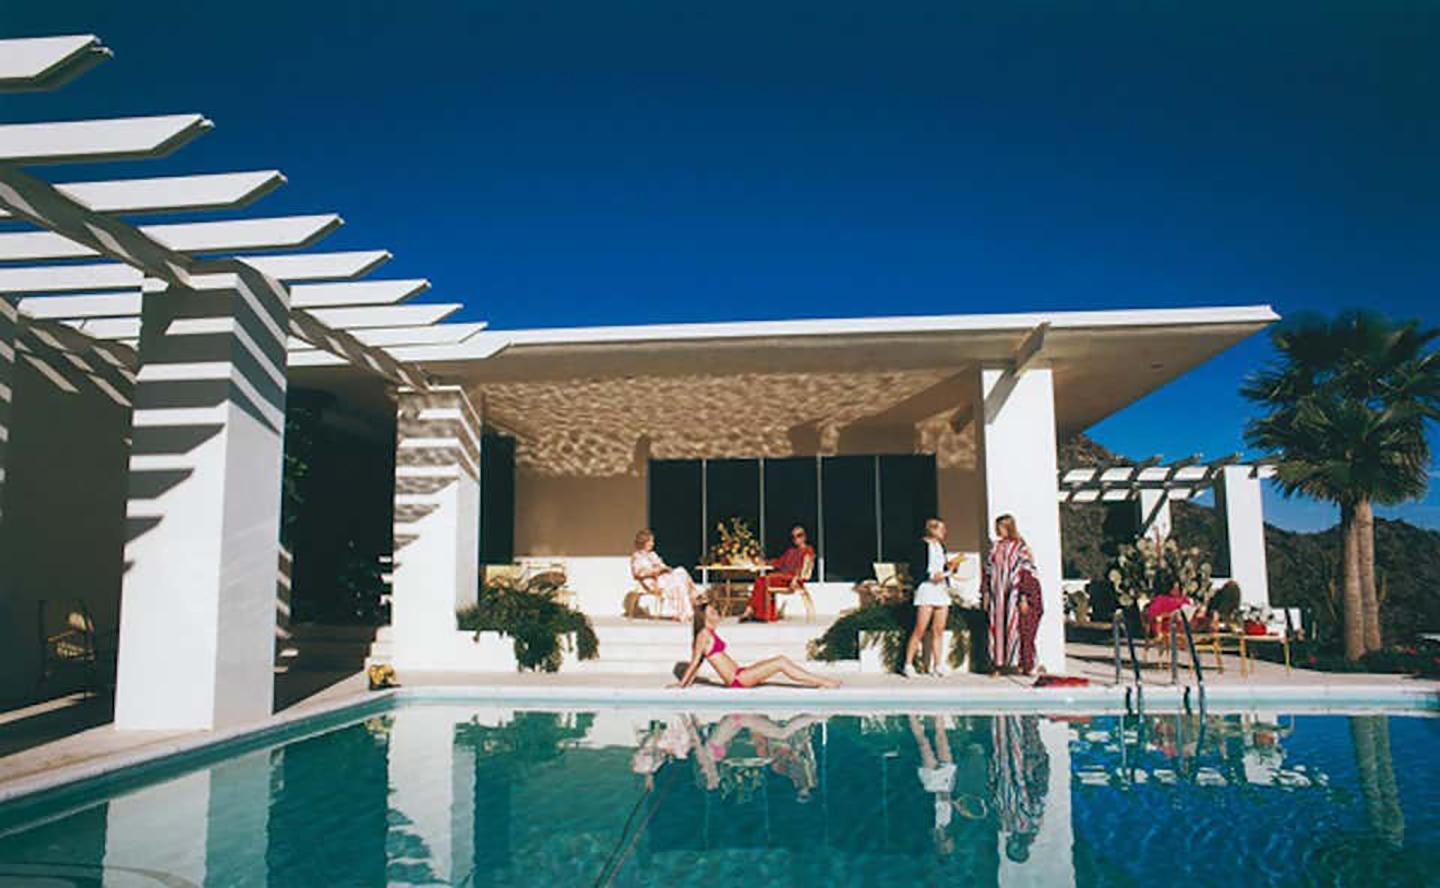 Poolside in Arizona, Estate Edition (Vintage Midcentury Architecture)